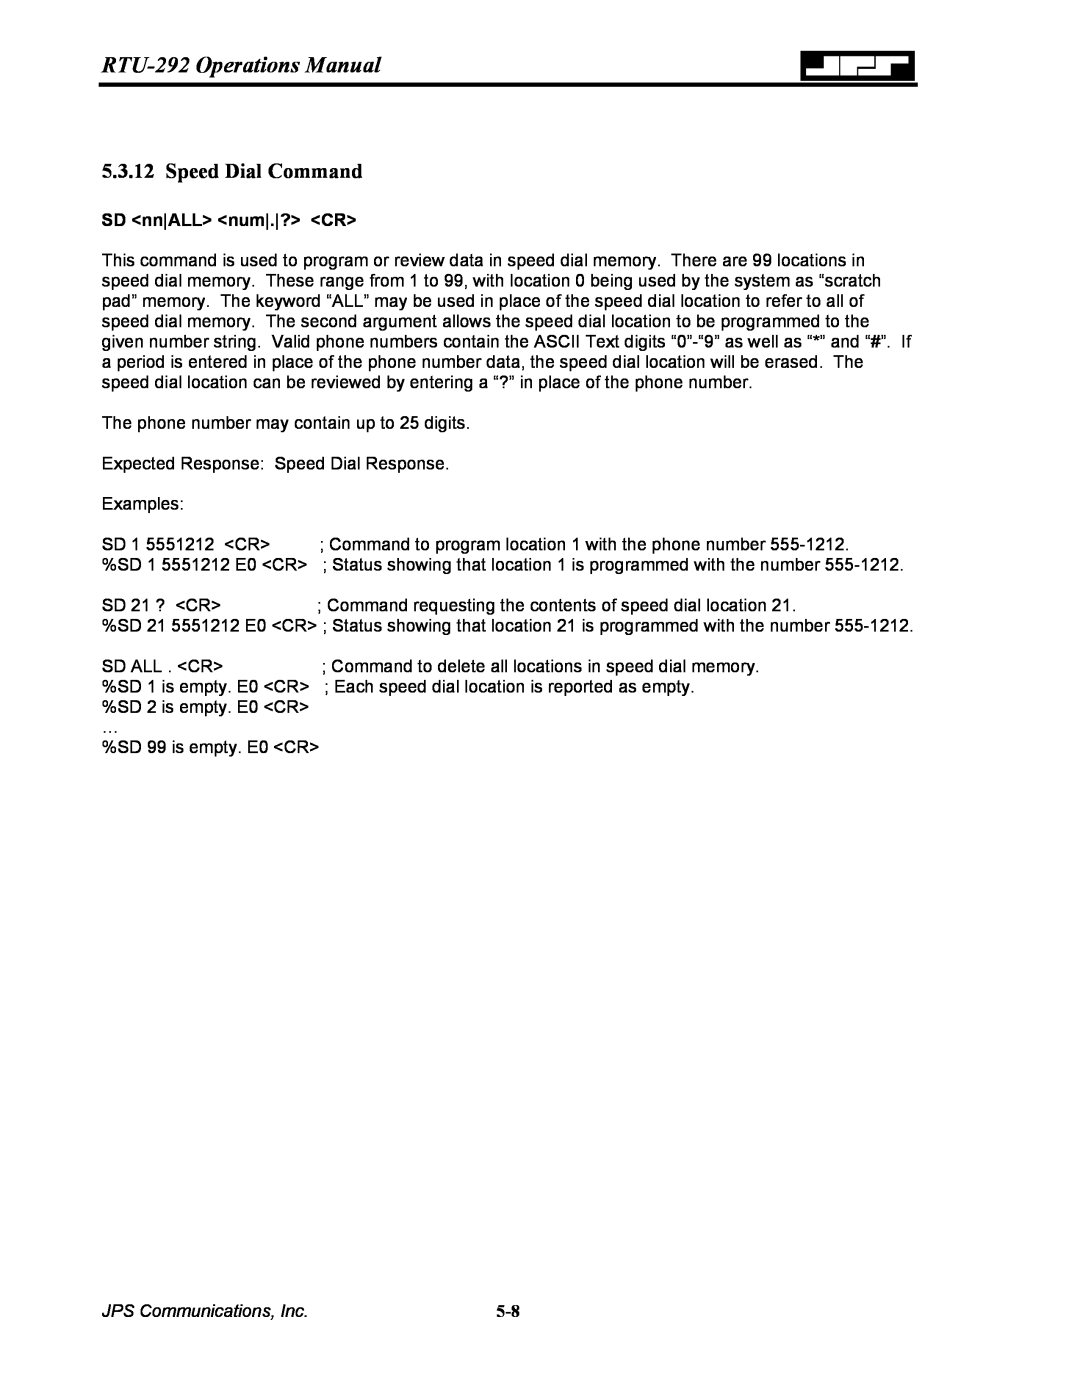 Nortel Networks RTU-292 Operations Manual, Speed Dial Command, SD nnALL num.? CR, JPS Communications, Inc 